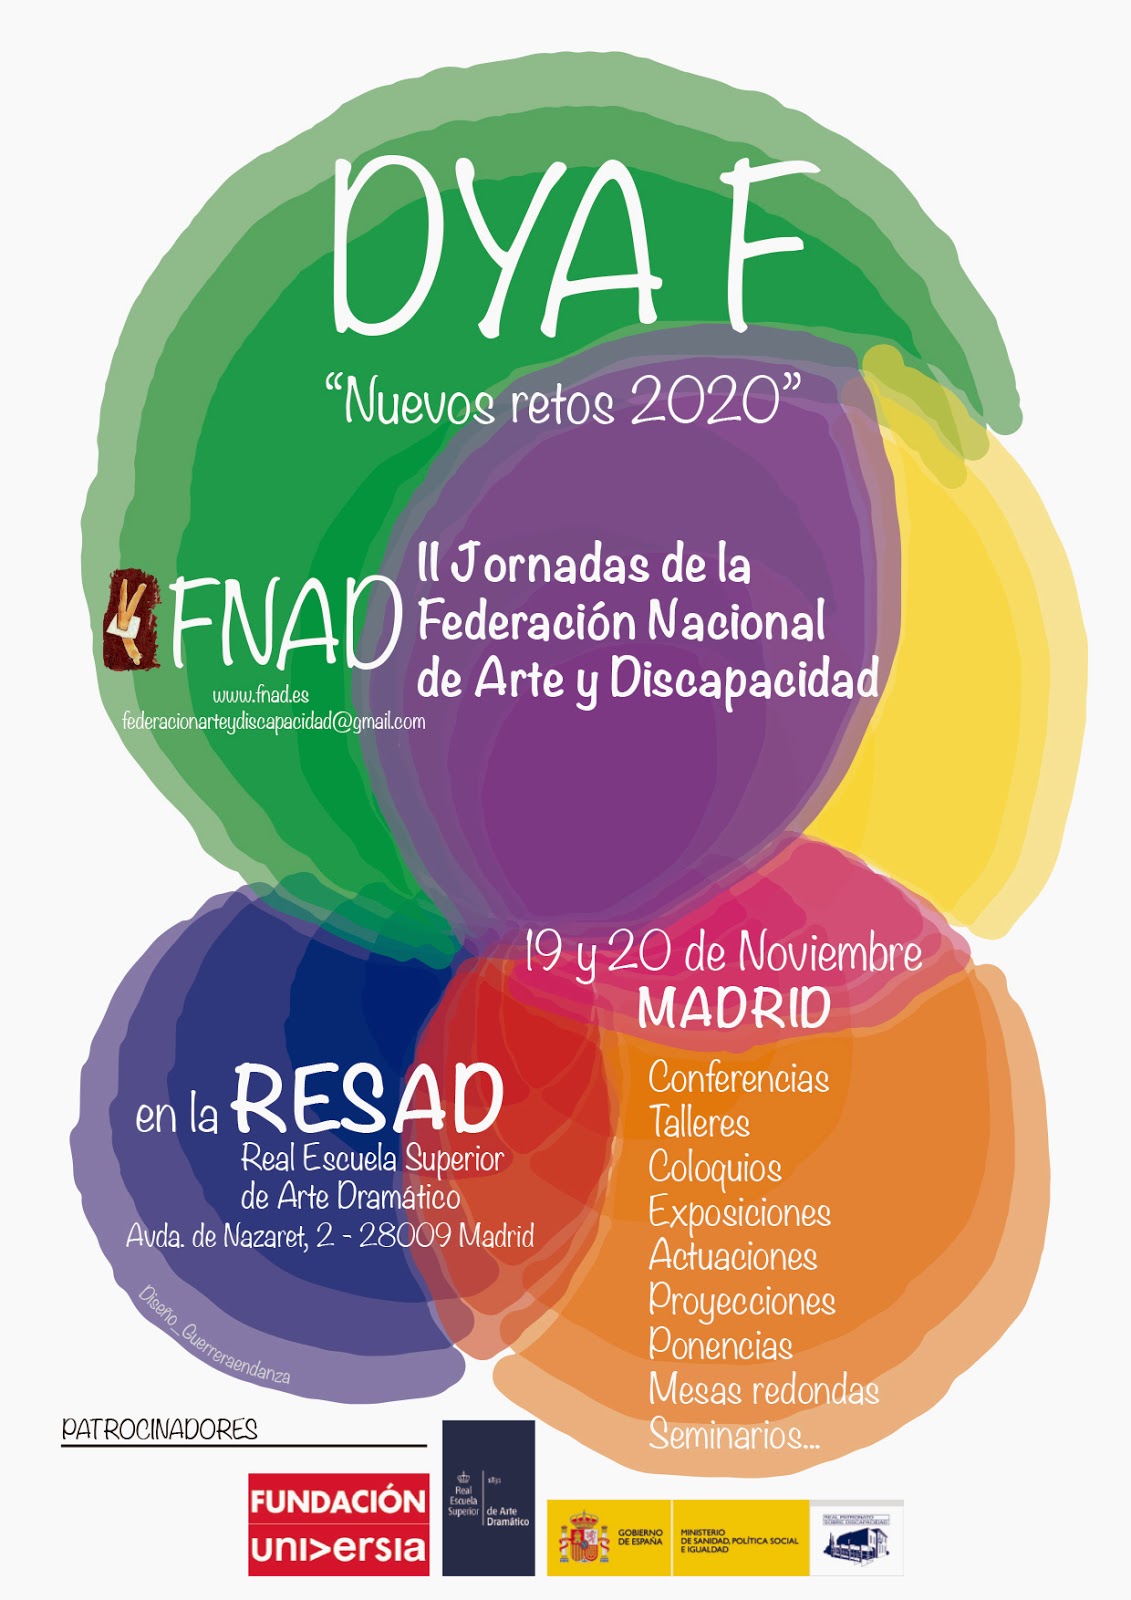 http://federacionnacionalartediscapacidad.blogspot.com.es/2014/11/dya-f-ii-jornadas-de-la-fnad-federacion.html